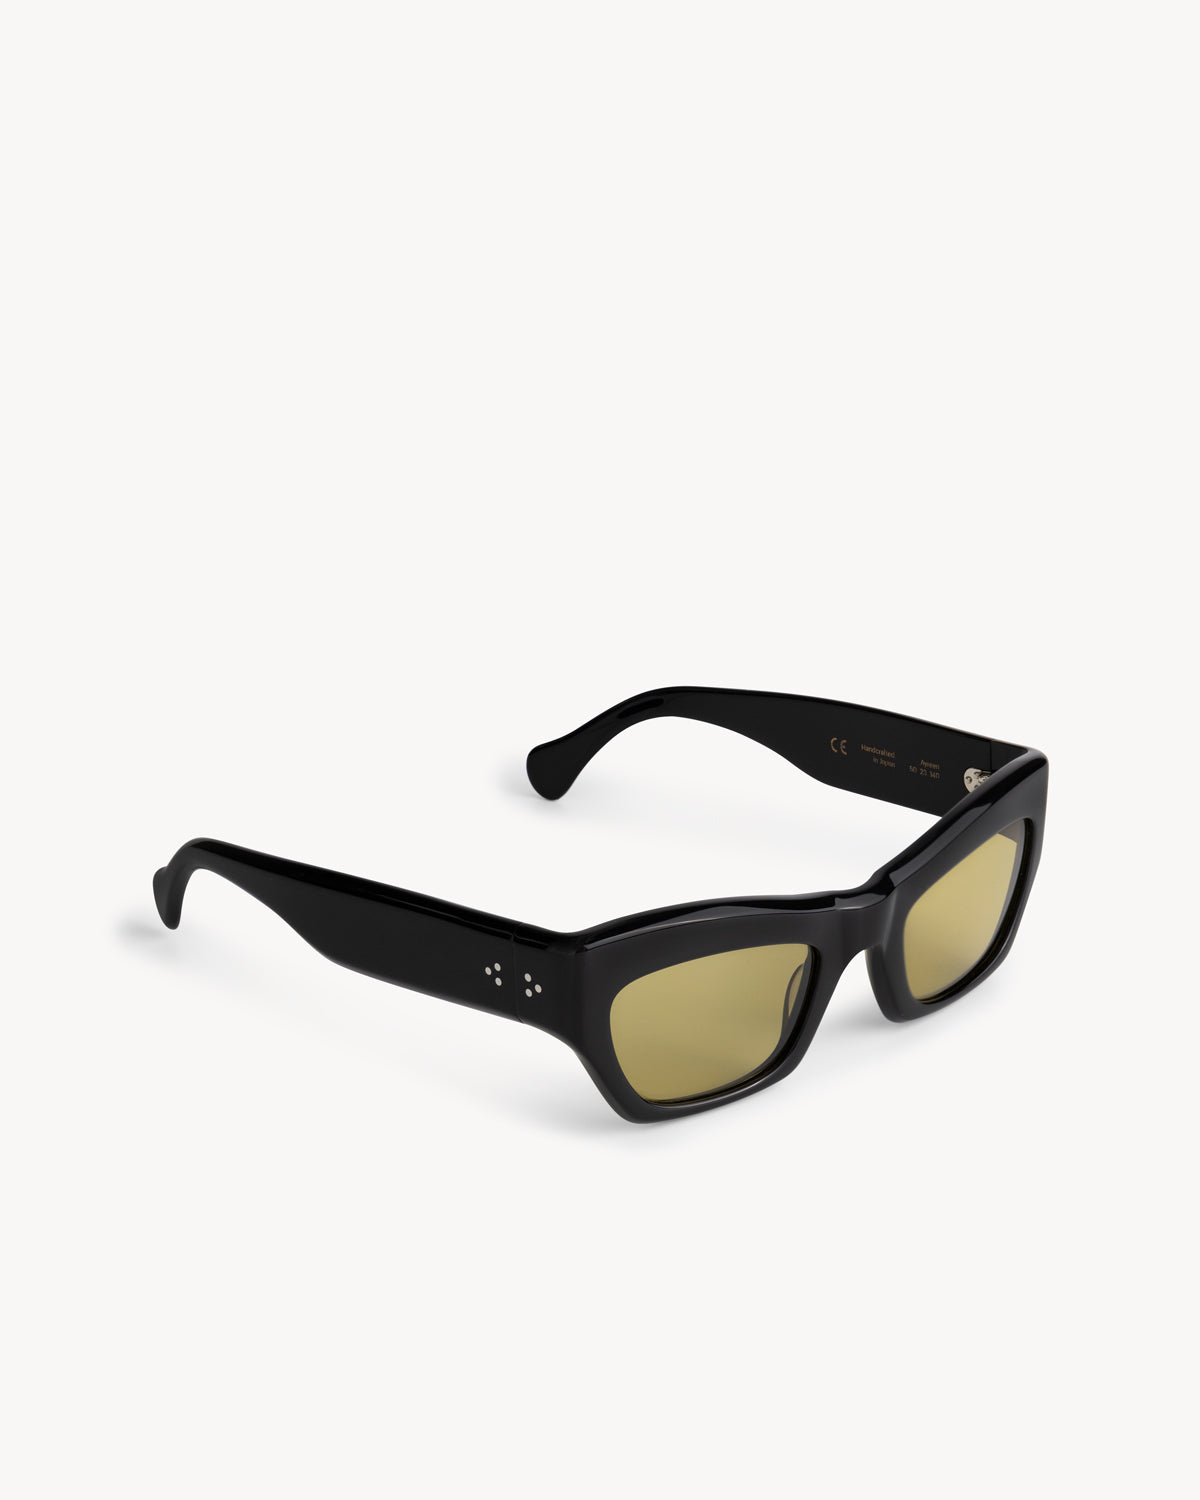 Port Tanger Ayreen Sunglasses in Black Acetate and Warm Olive Lenses 2